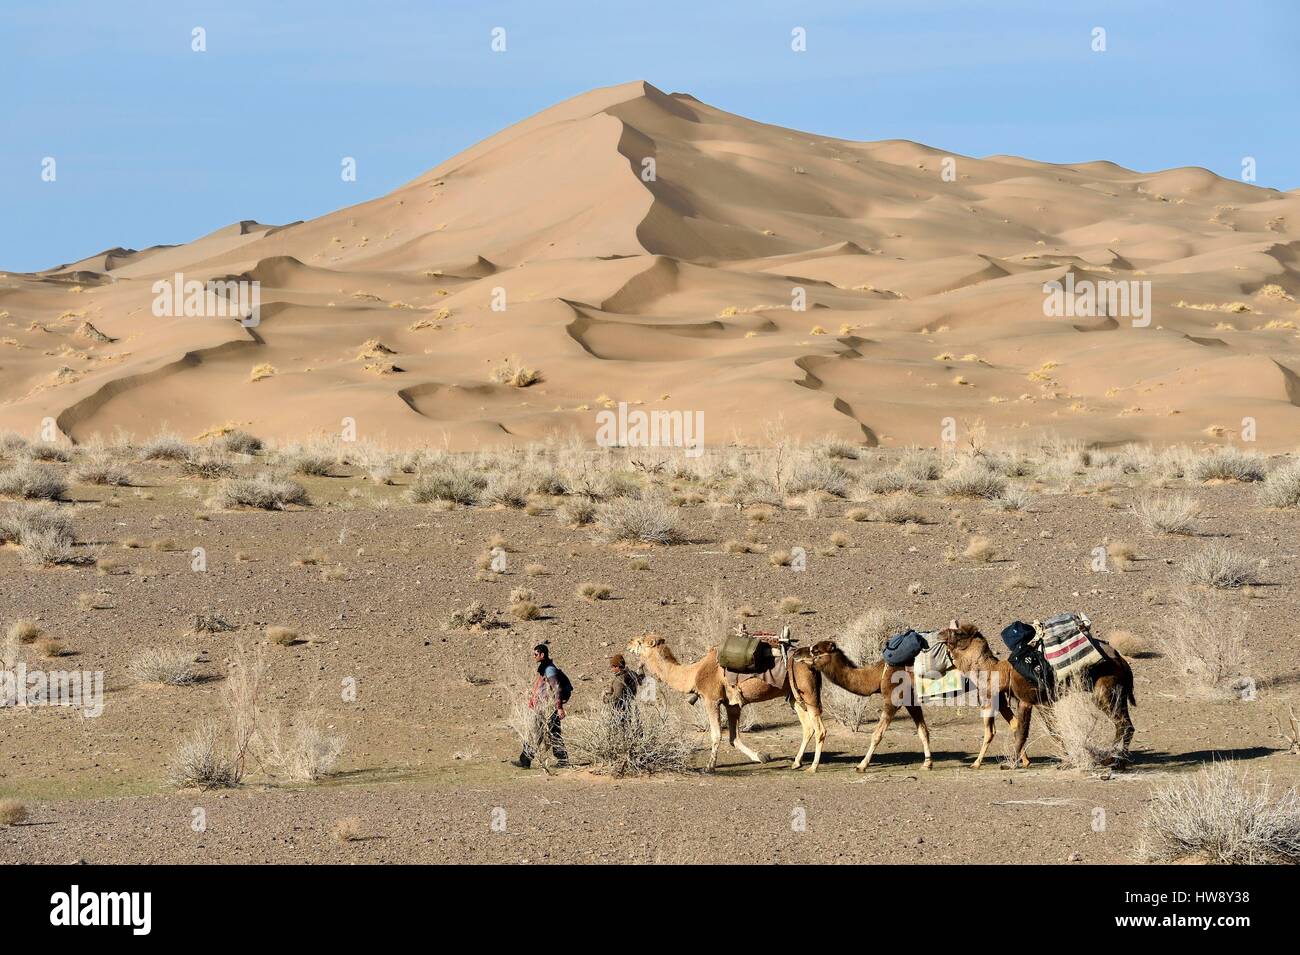 Iran, Isfahan province, Dasht-e Kavir desert, Mesr in Khur and Biabanak County, camel train passing at the foot of sand dunes Stock Photo